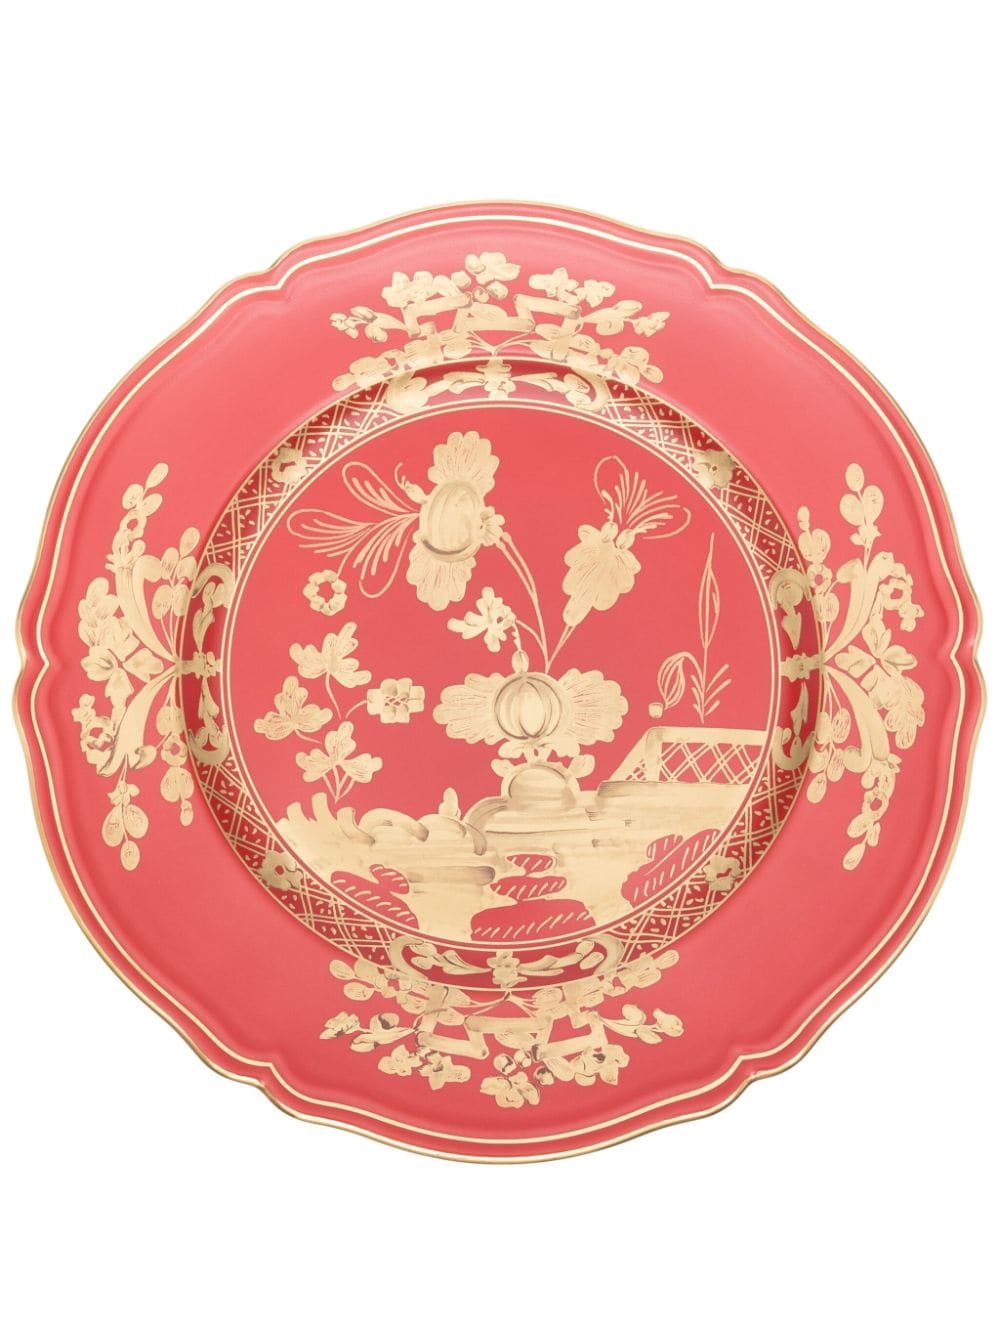 Ginori 1735 Rubrum Porcelain Plate (31cm) In Red